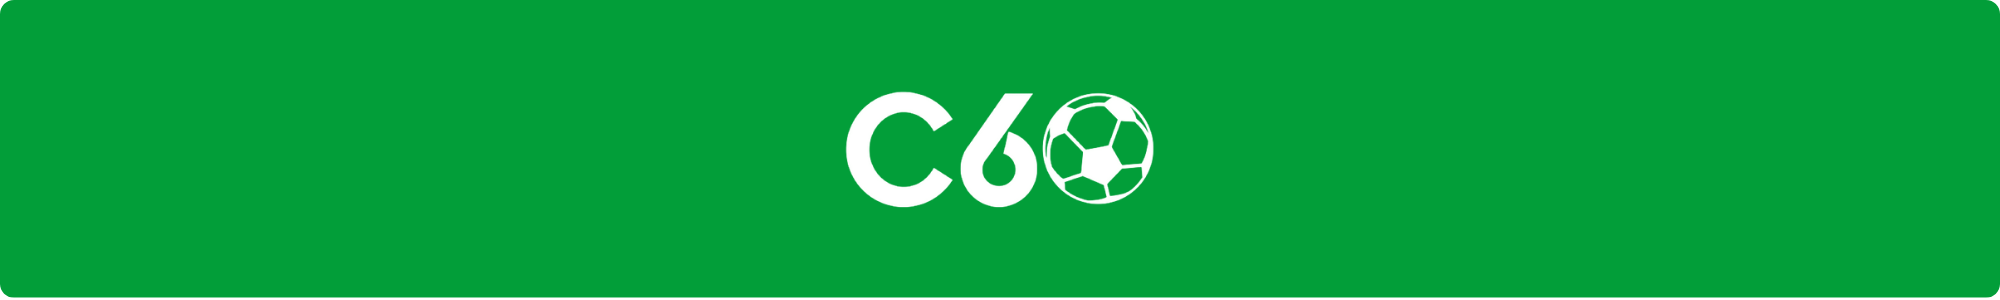 c6 deportes